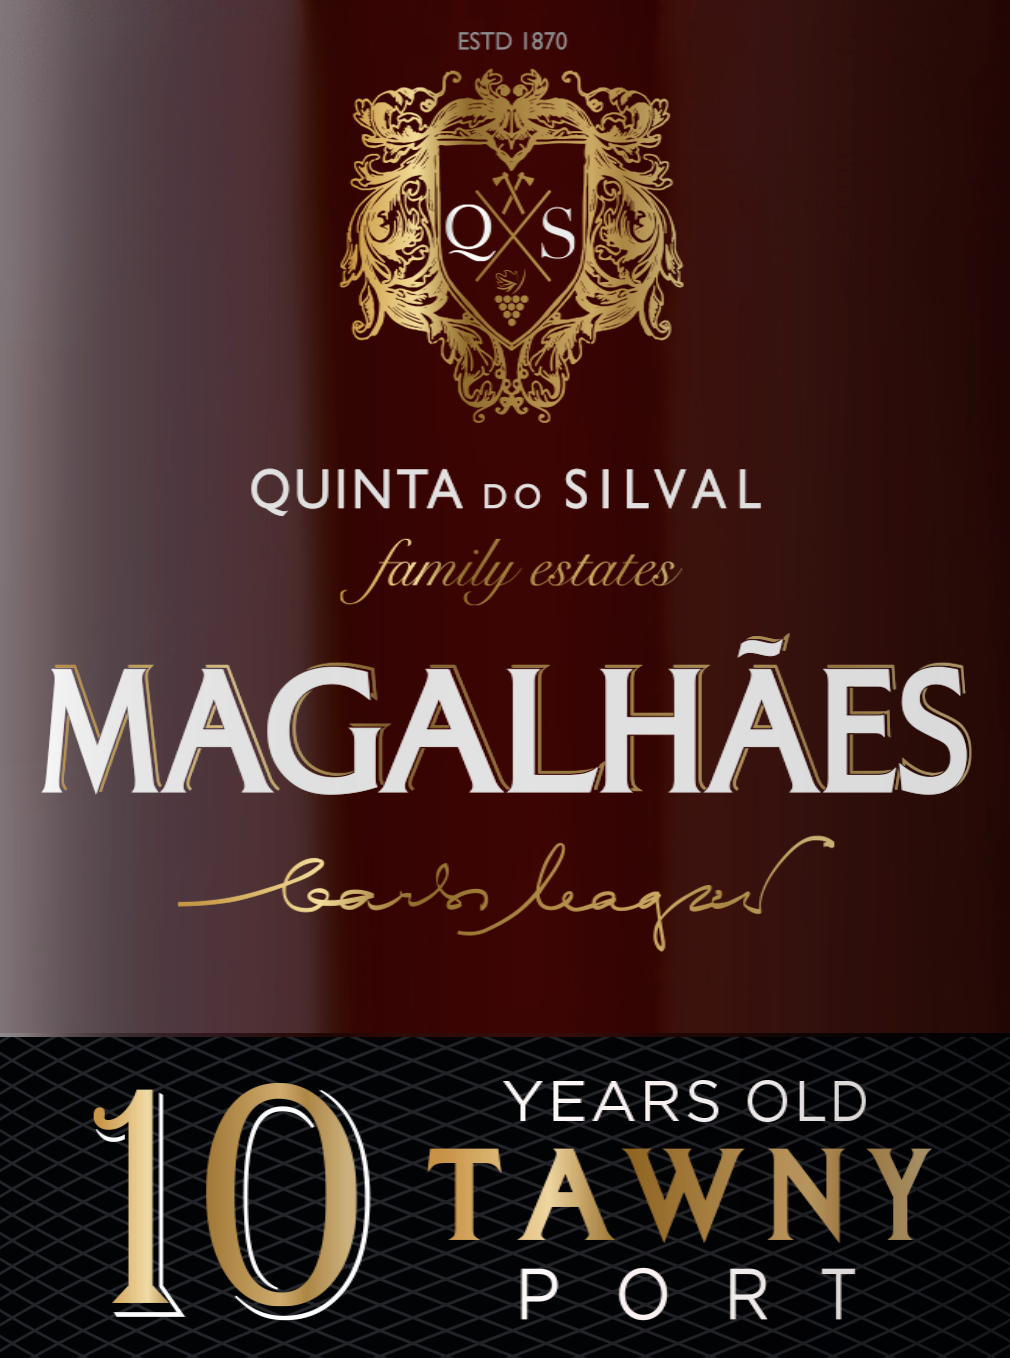 Magalhães Tawny 10 år 19% 500 ml